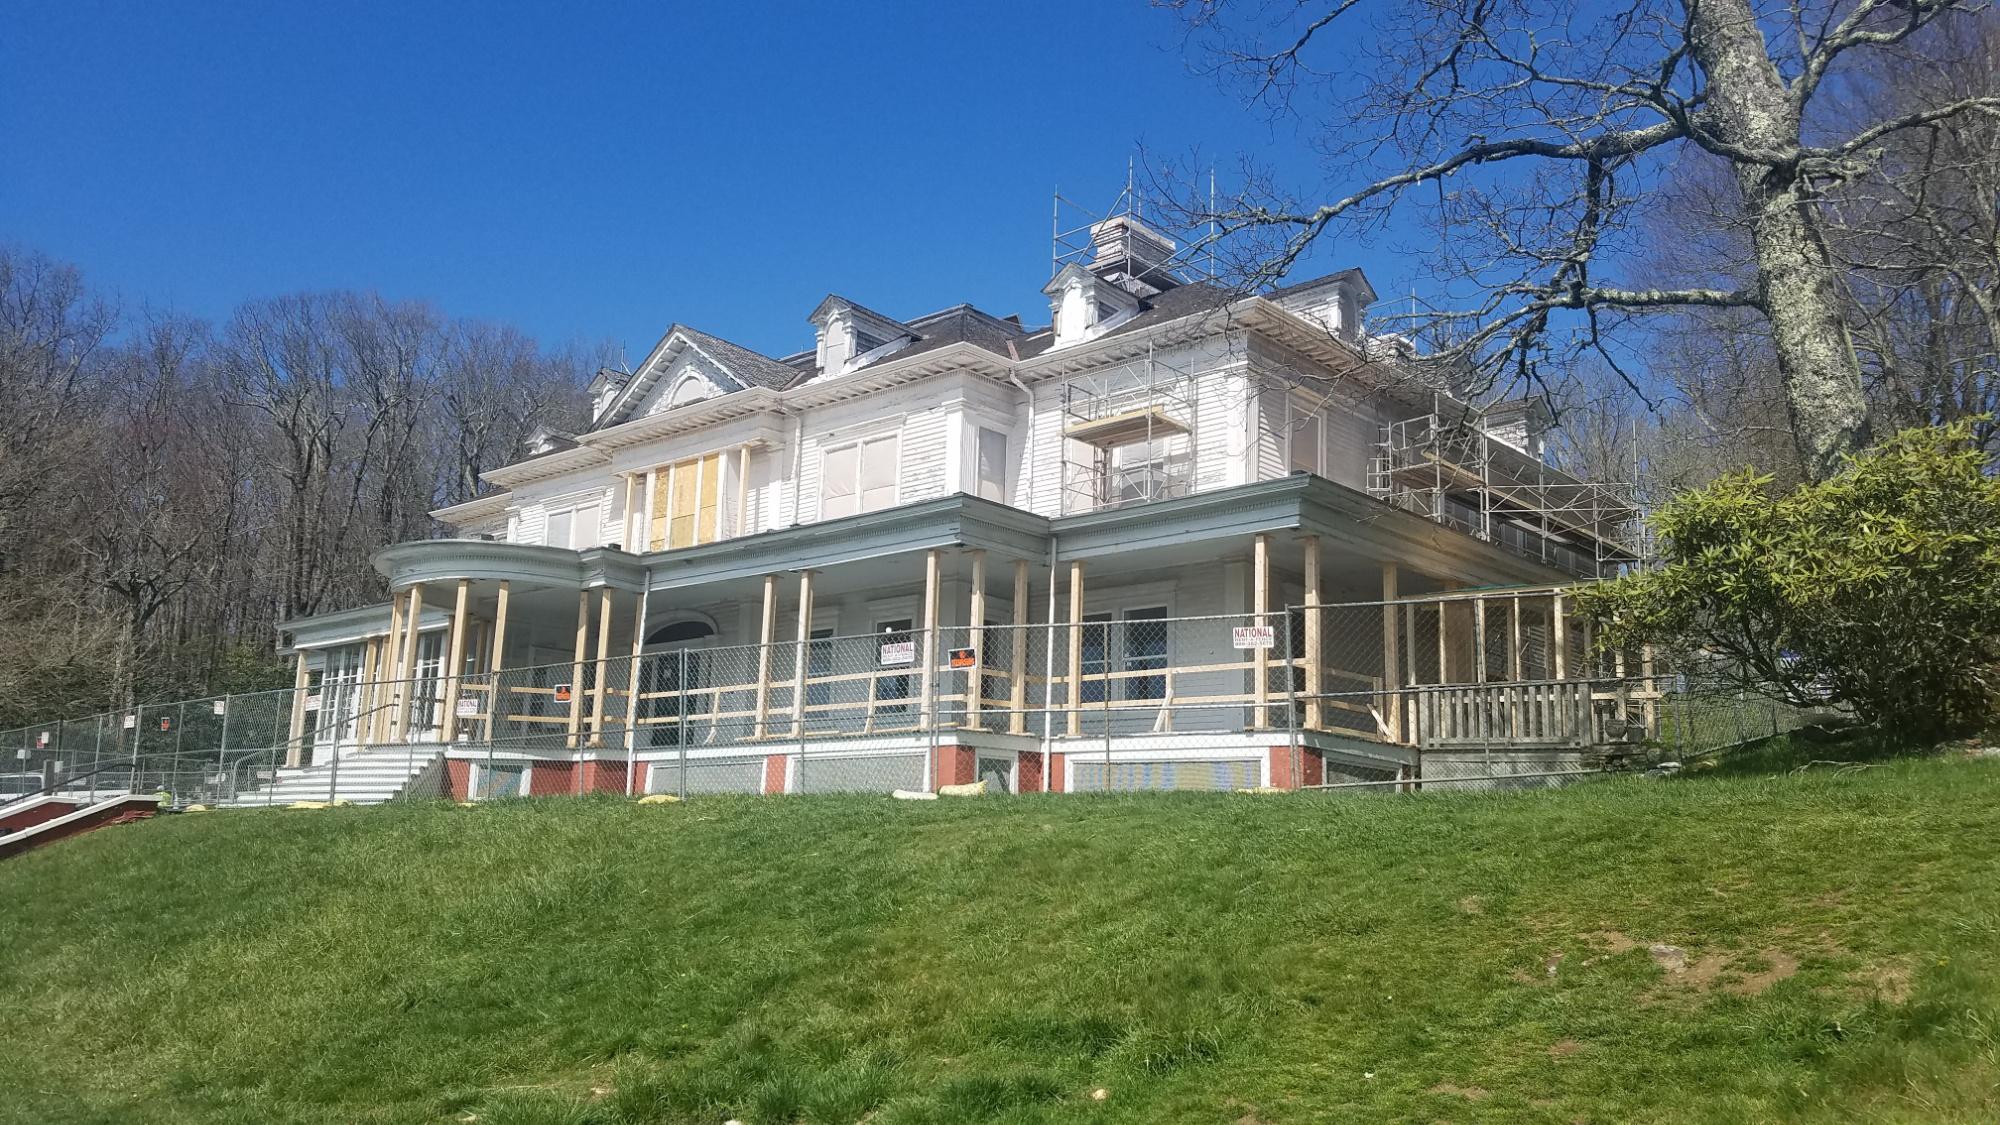 Flat Top Manor under restoration